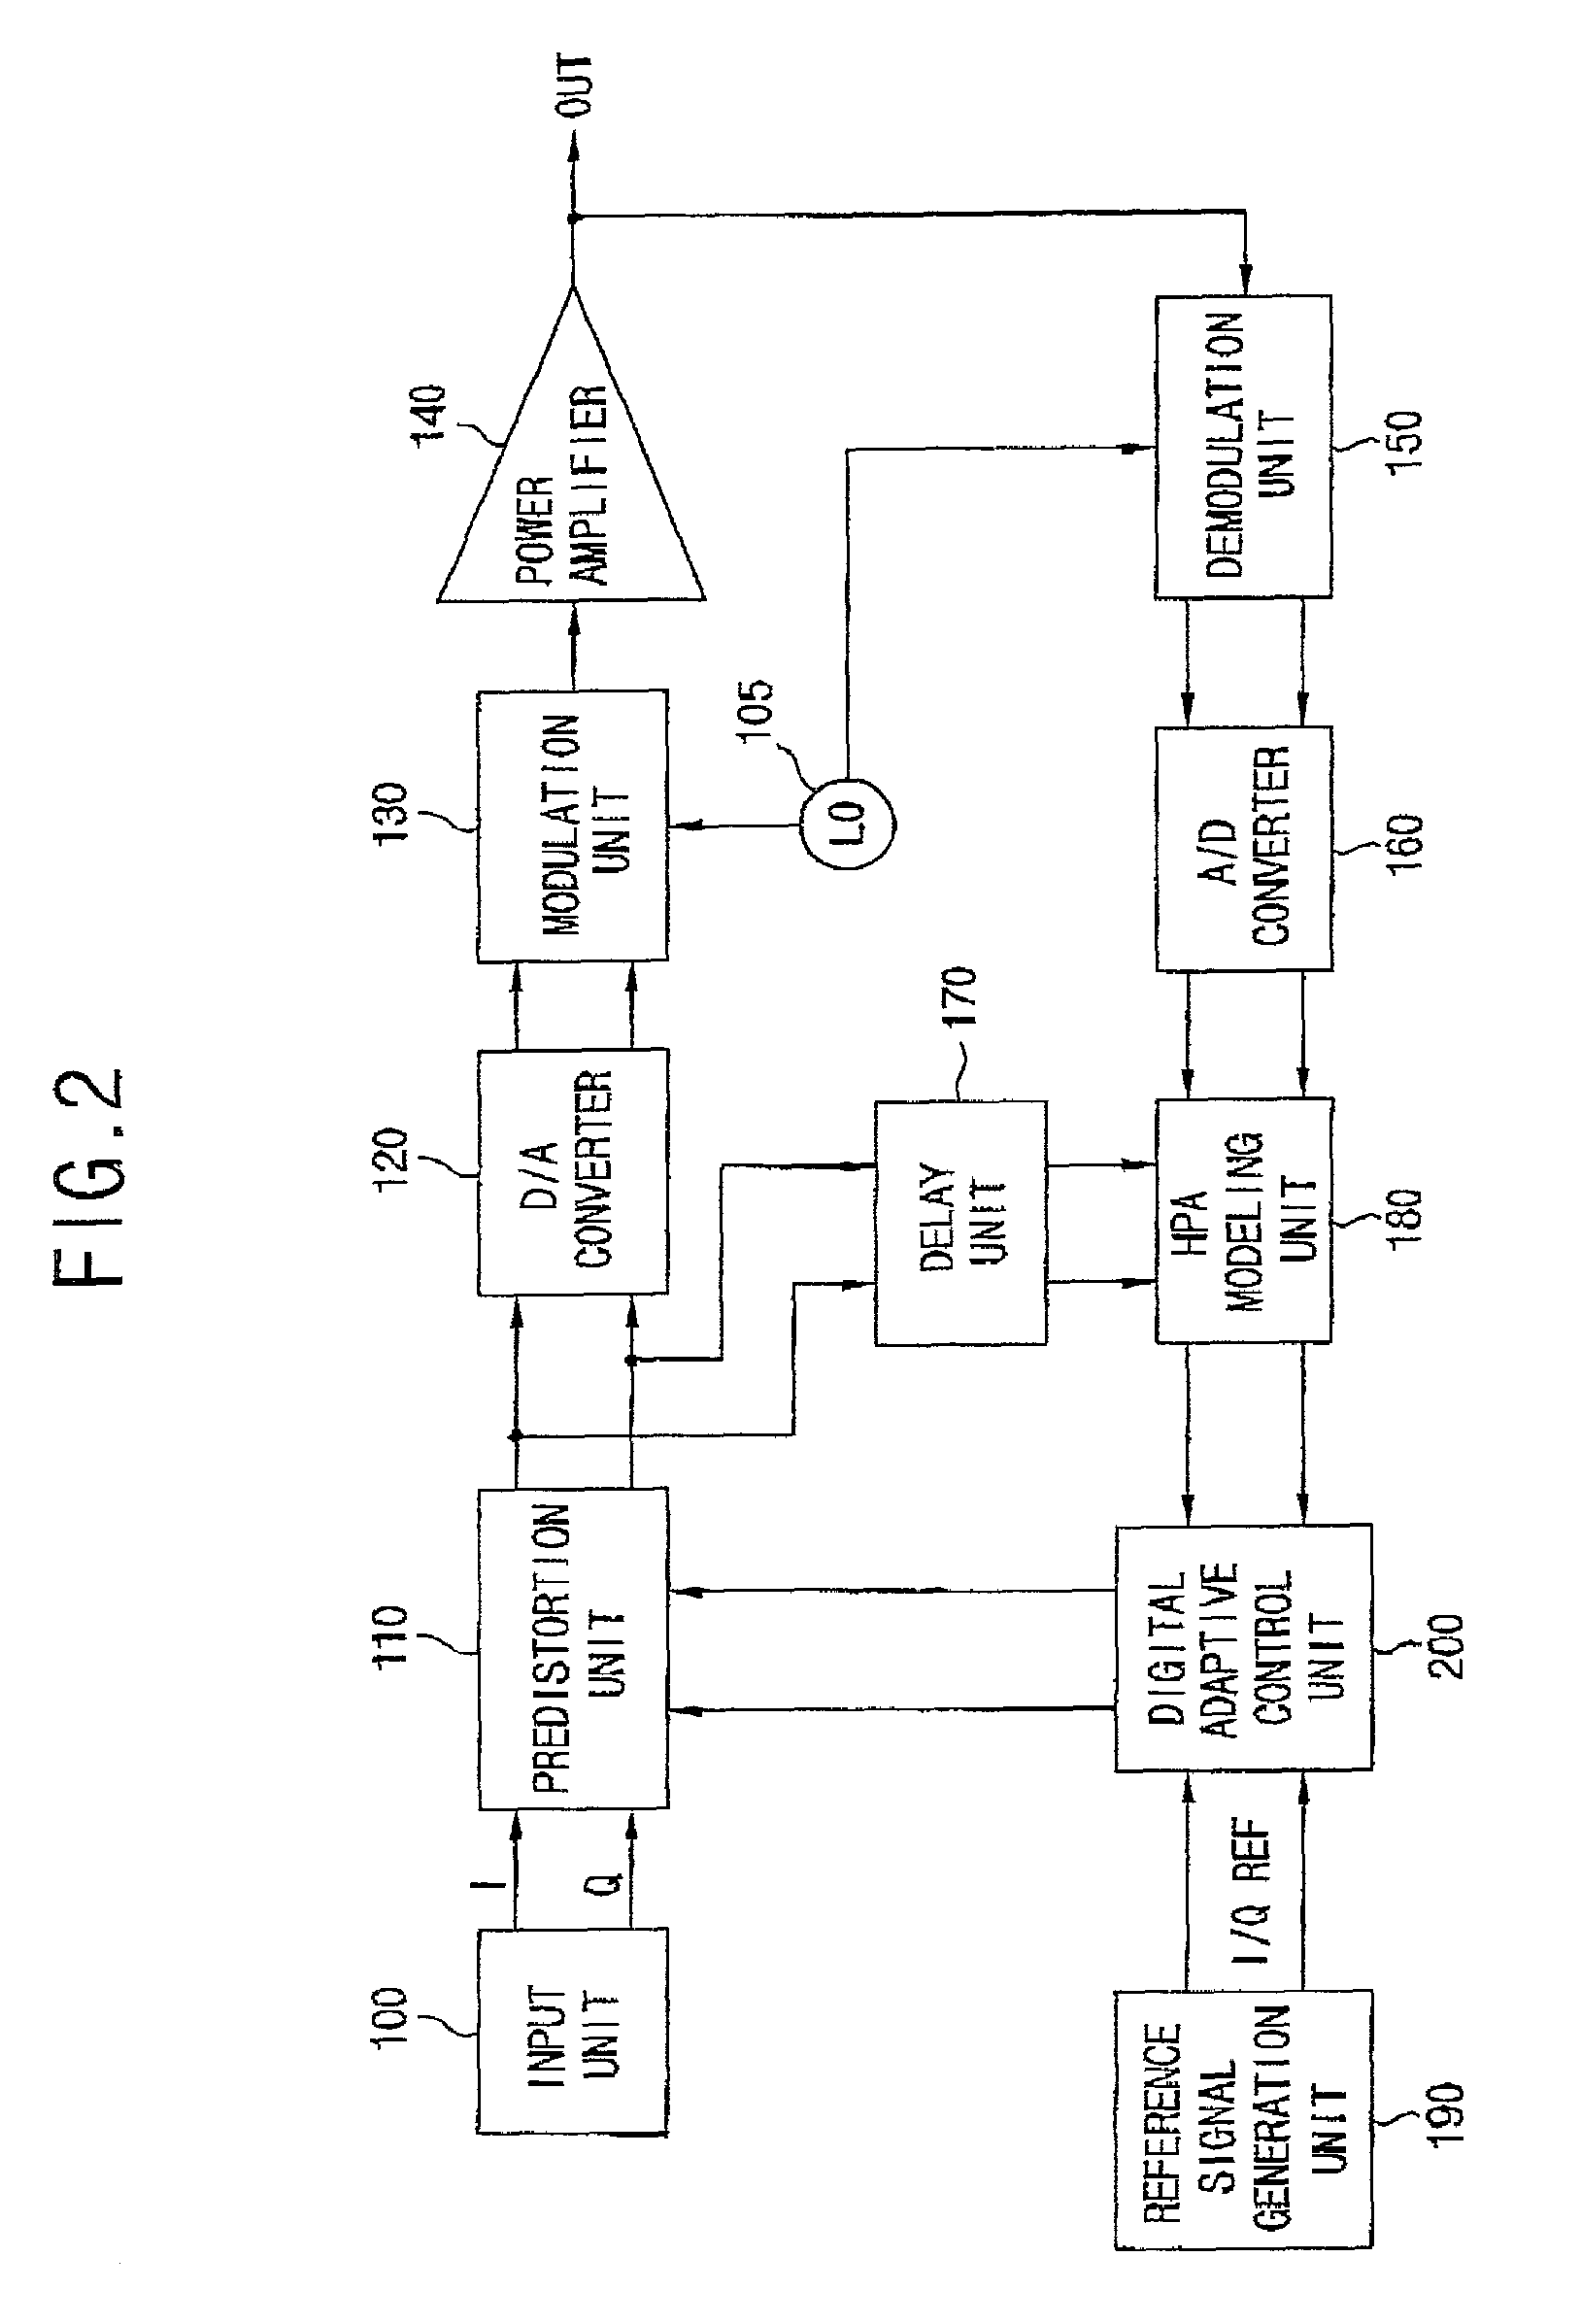 Base station transmitter having digital predistorter and predistortion method thereof